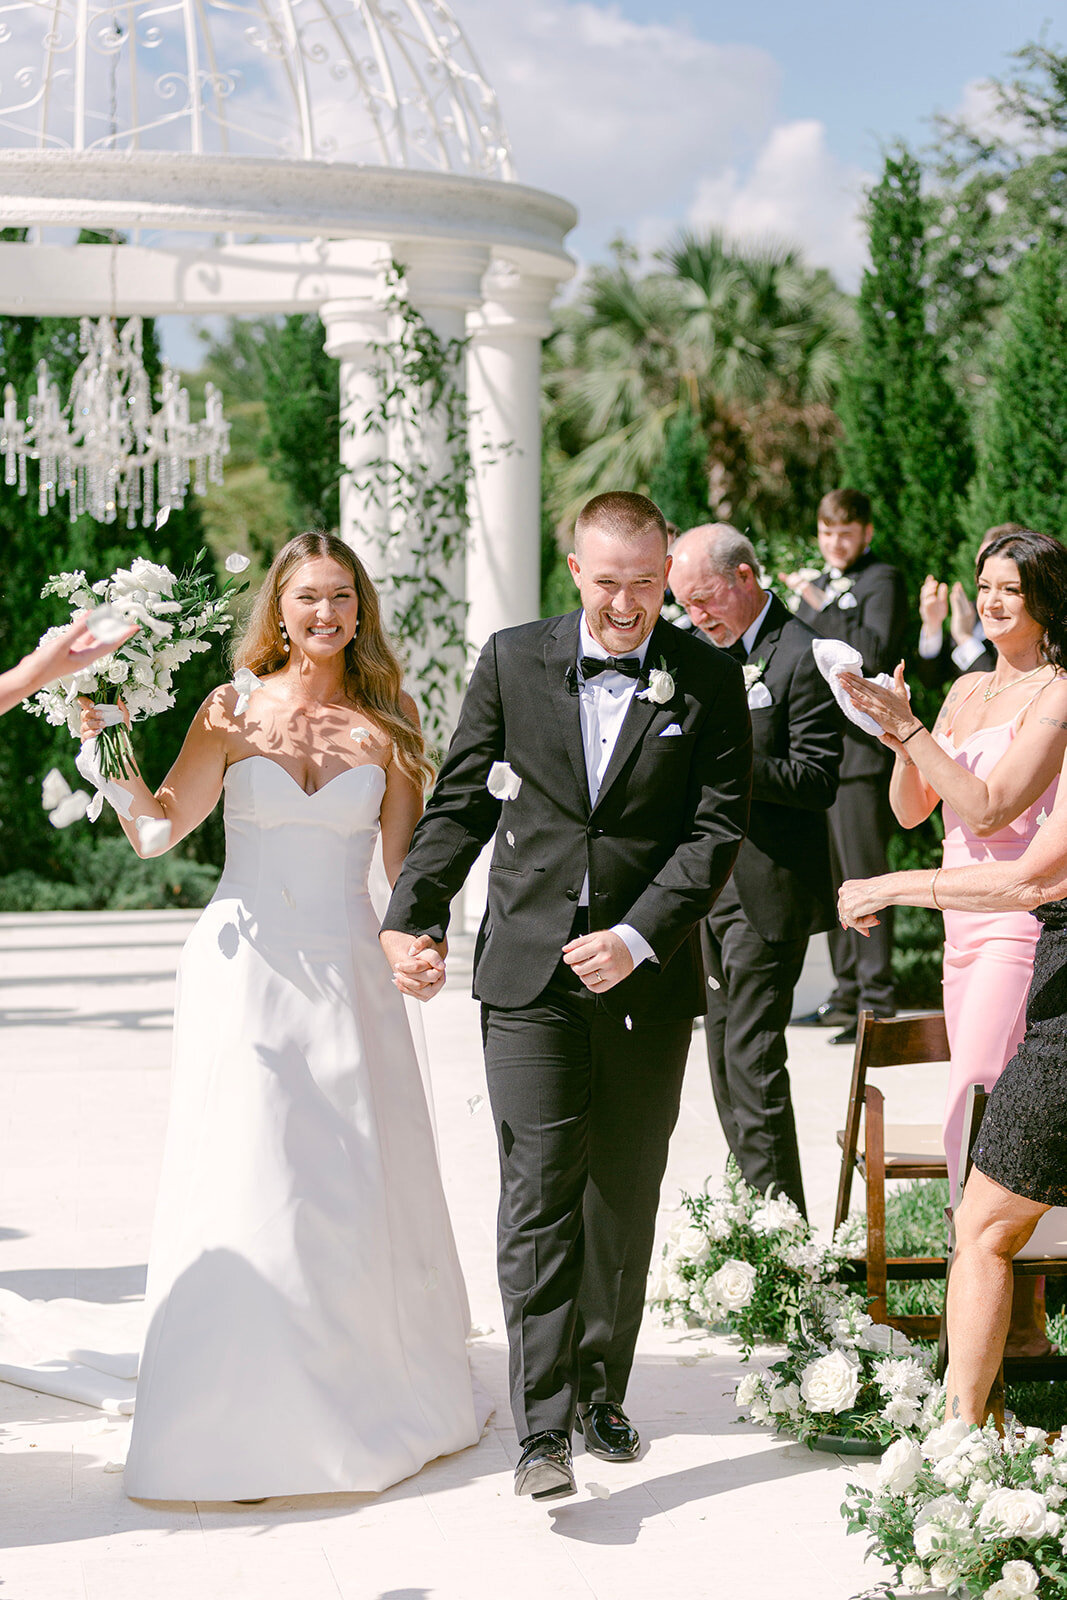 CORNELIA ZAISS PHOTOGRAPHY LEAH + ROBERT'S WEDDING 0727_websize